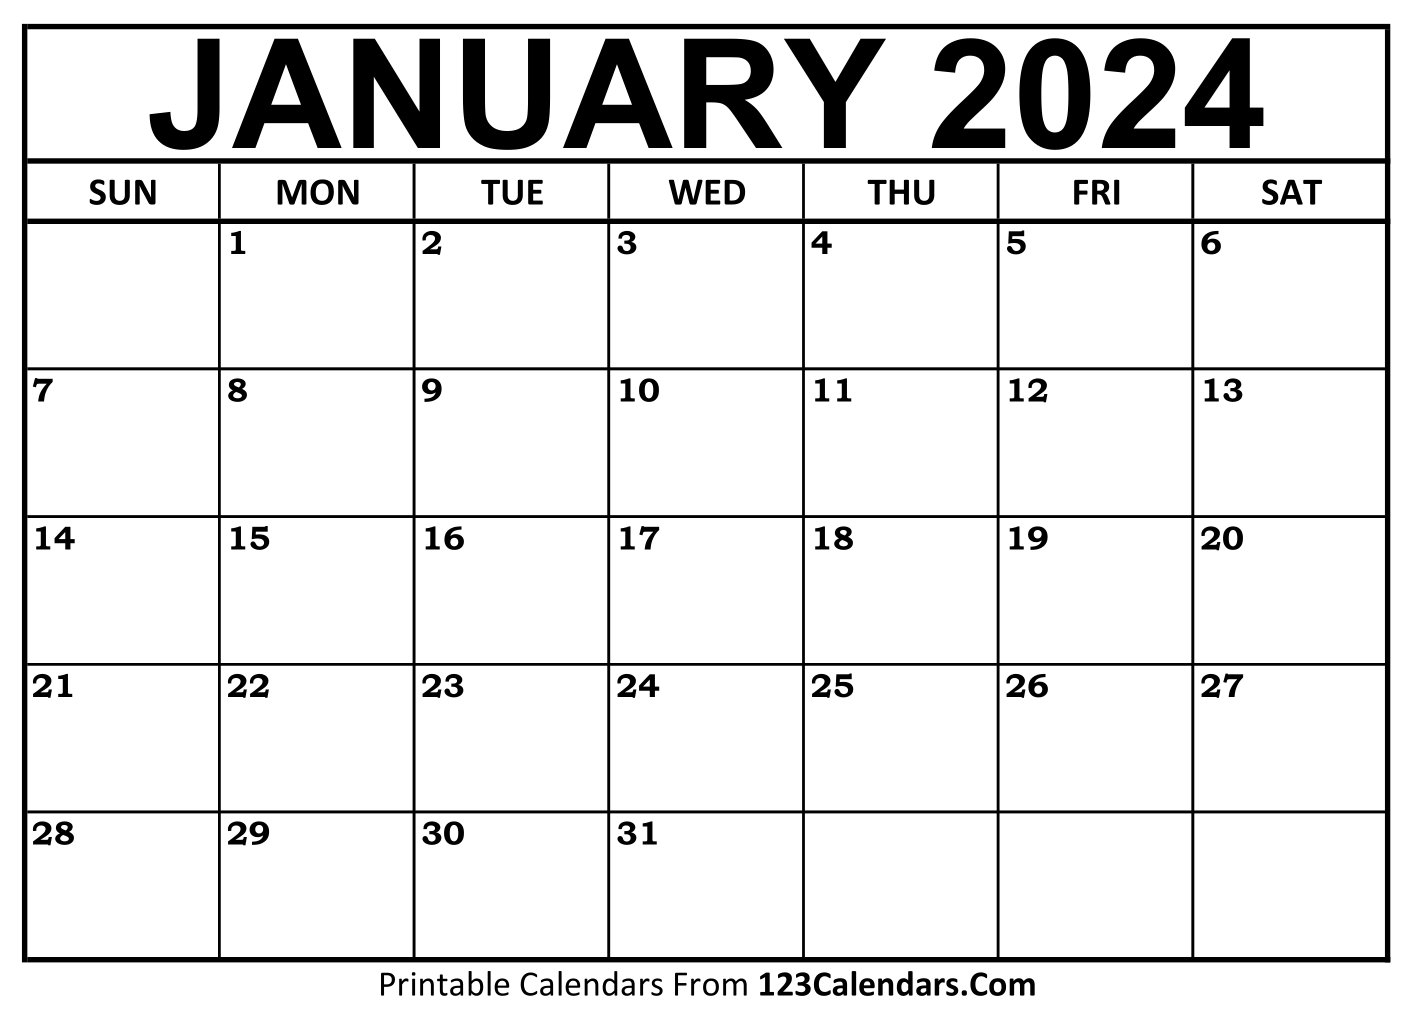 Printable January 2024 Calendar Templates - 123Calendars for Printable Calendar January 2024